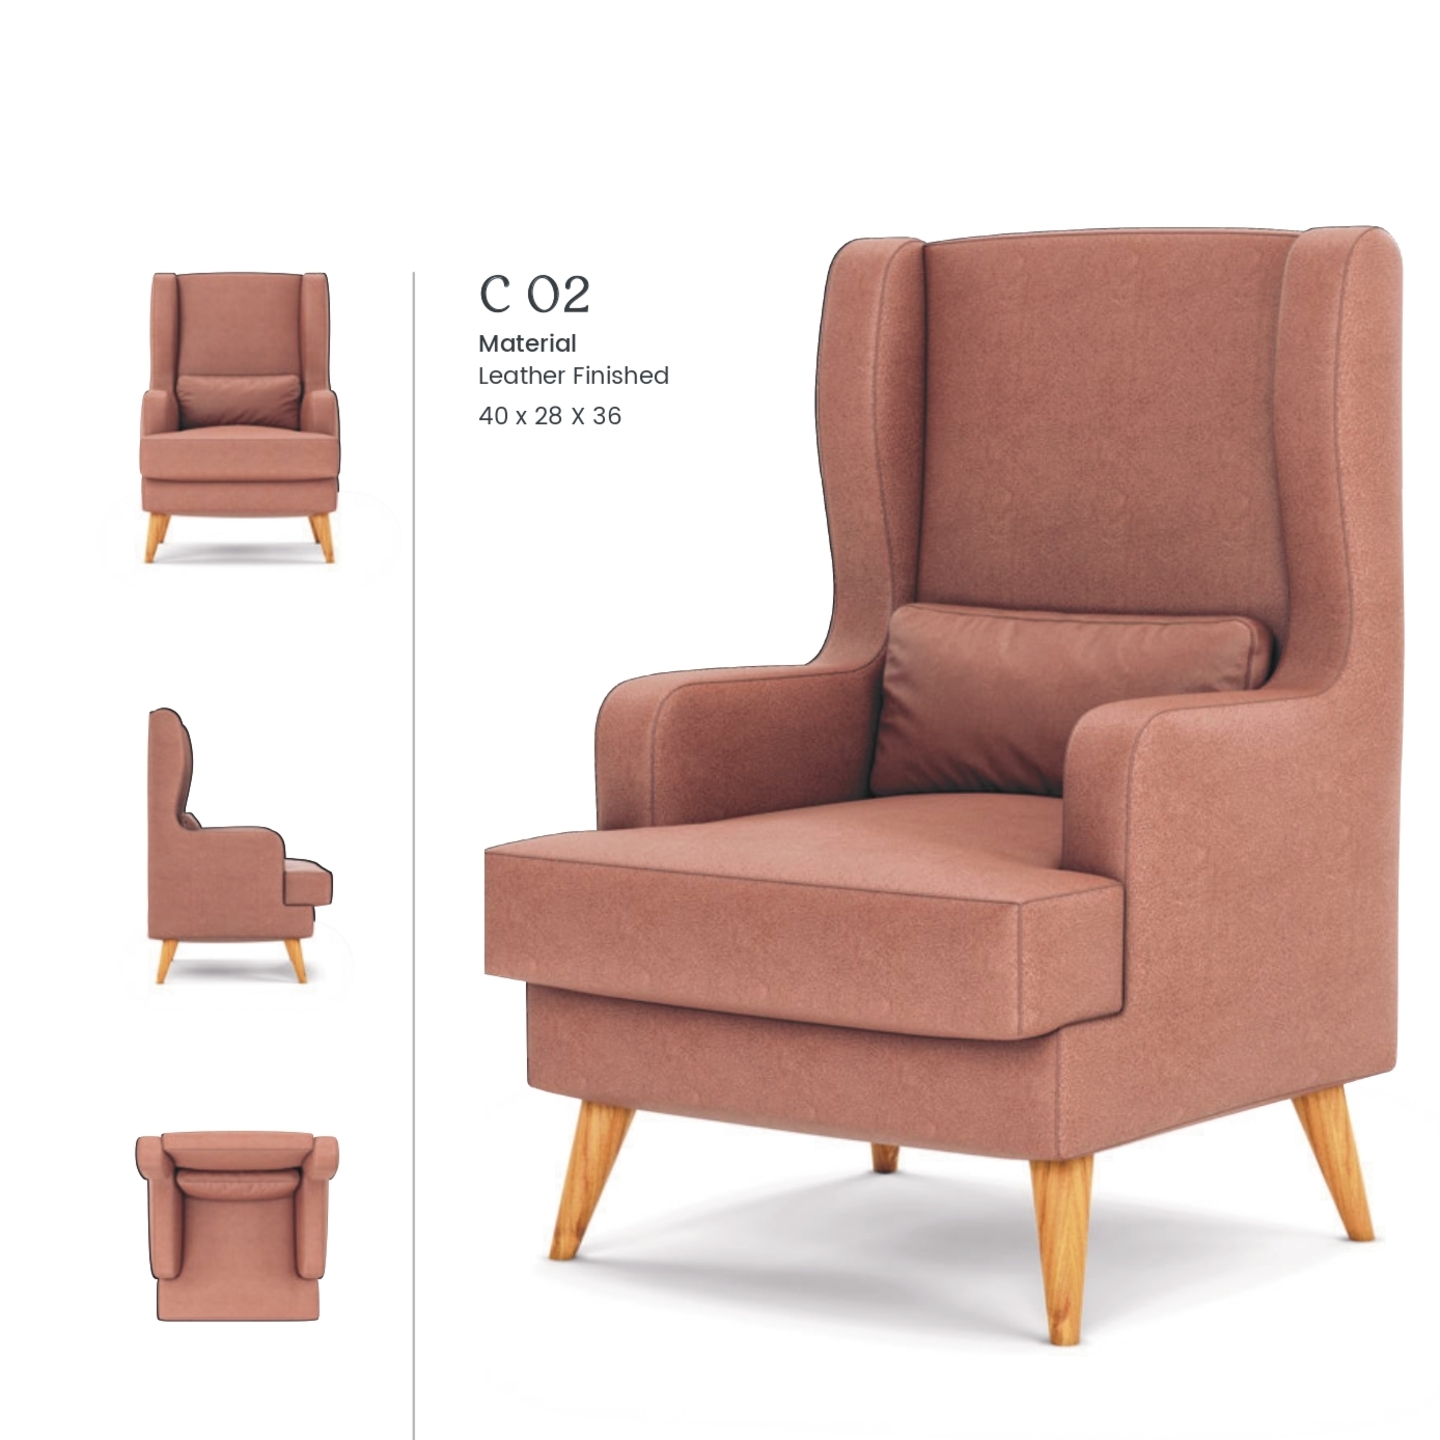 RLF Sofa Chair C-02